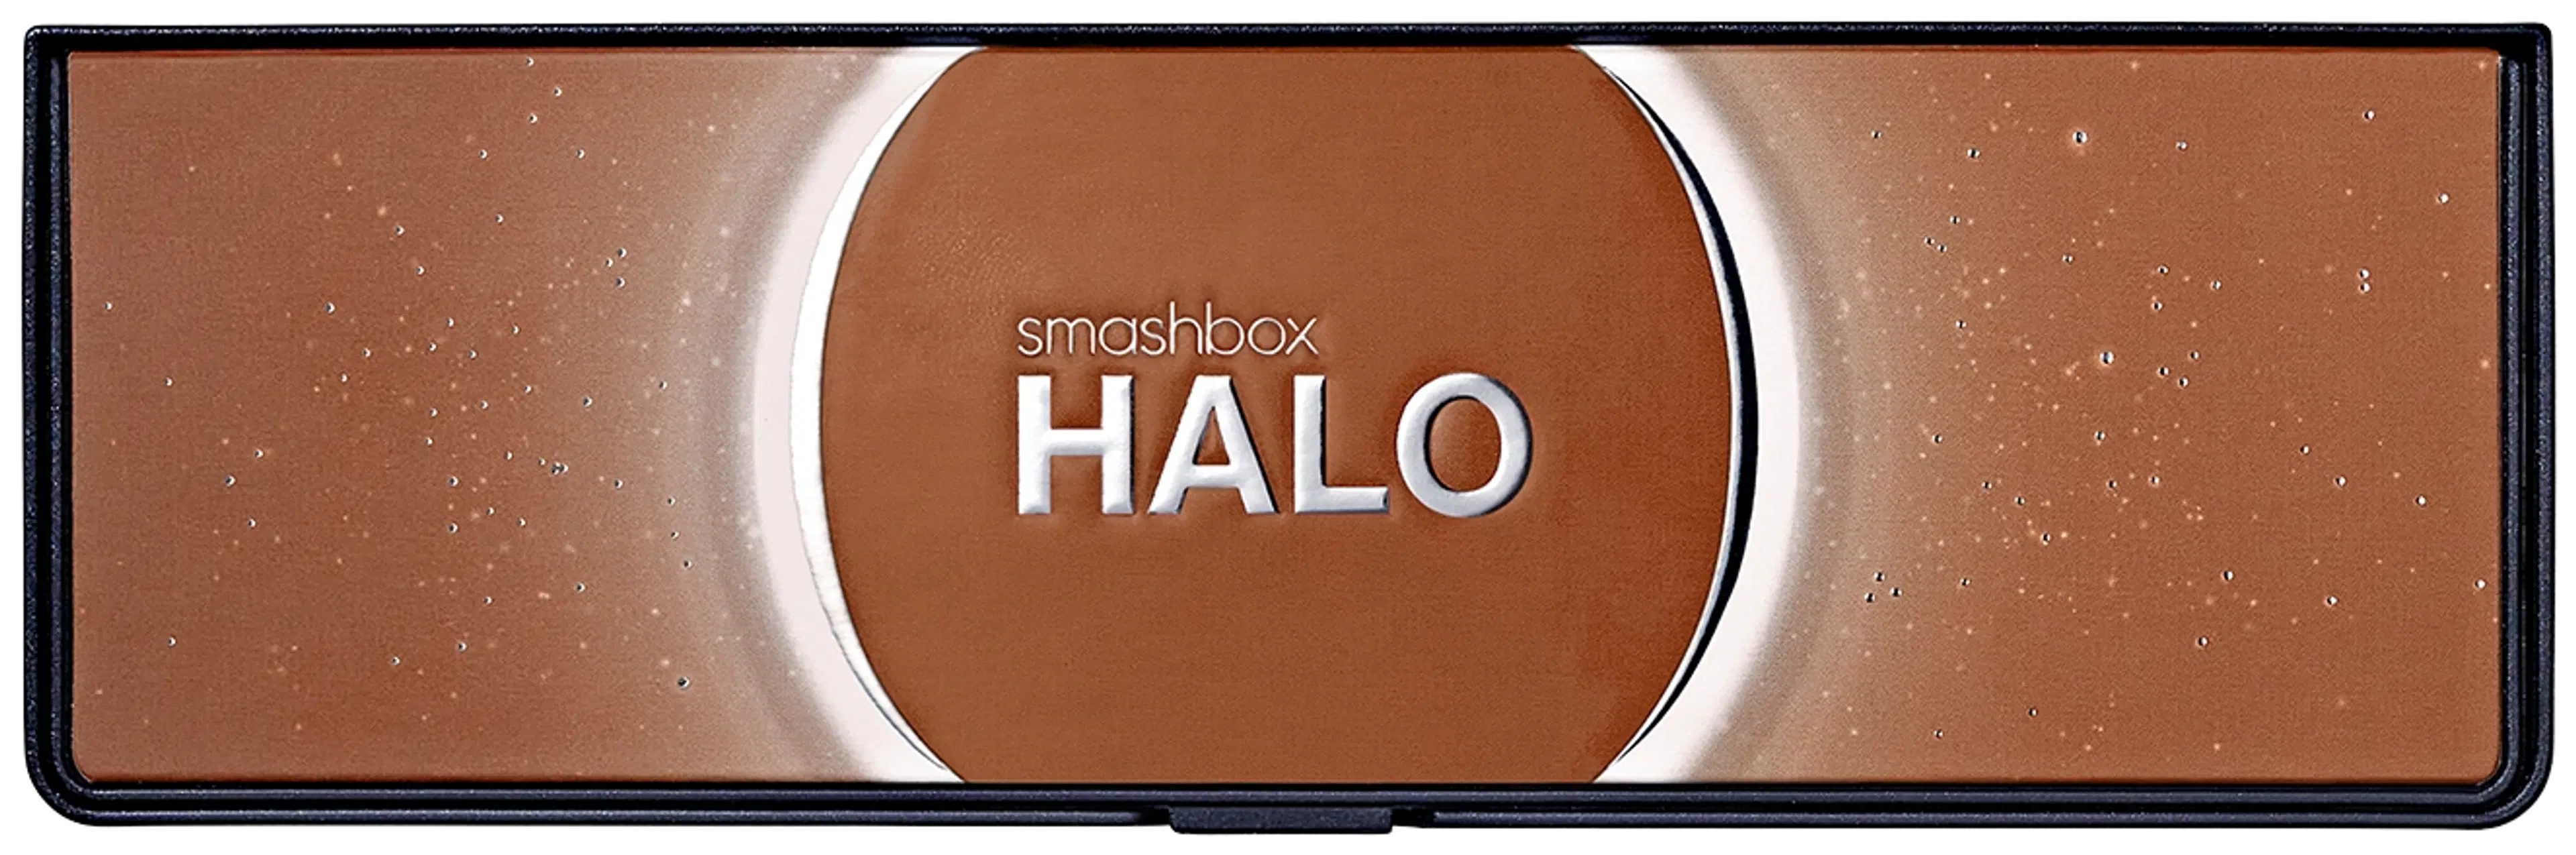 Smashbox Halo Sculpt + Glow Face Palette korostus- ja varjostuspaletti 15,7 g